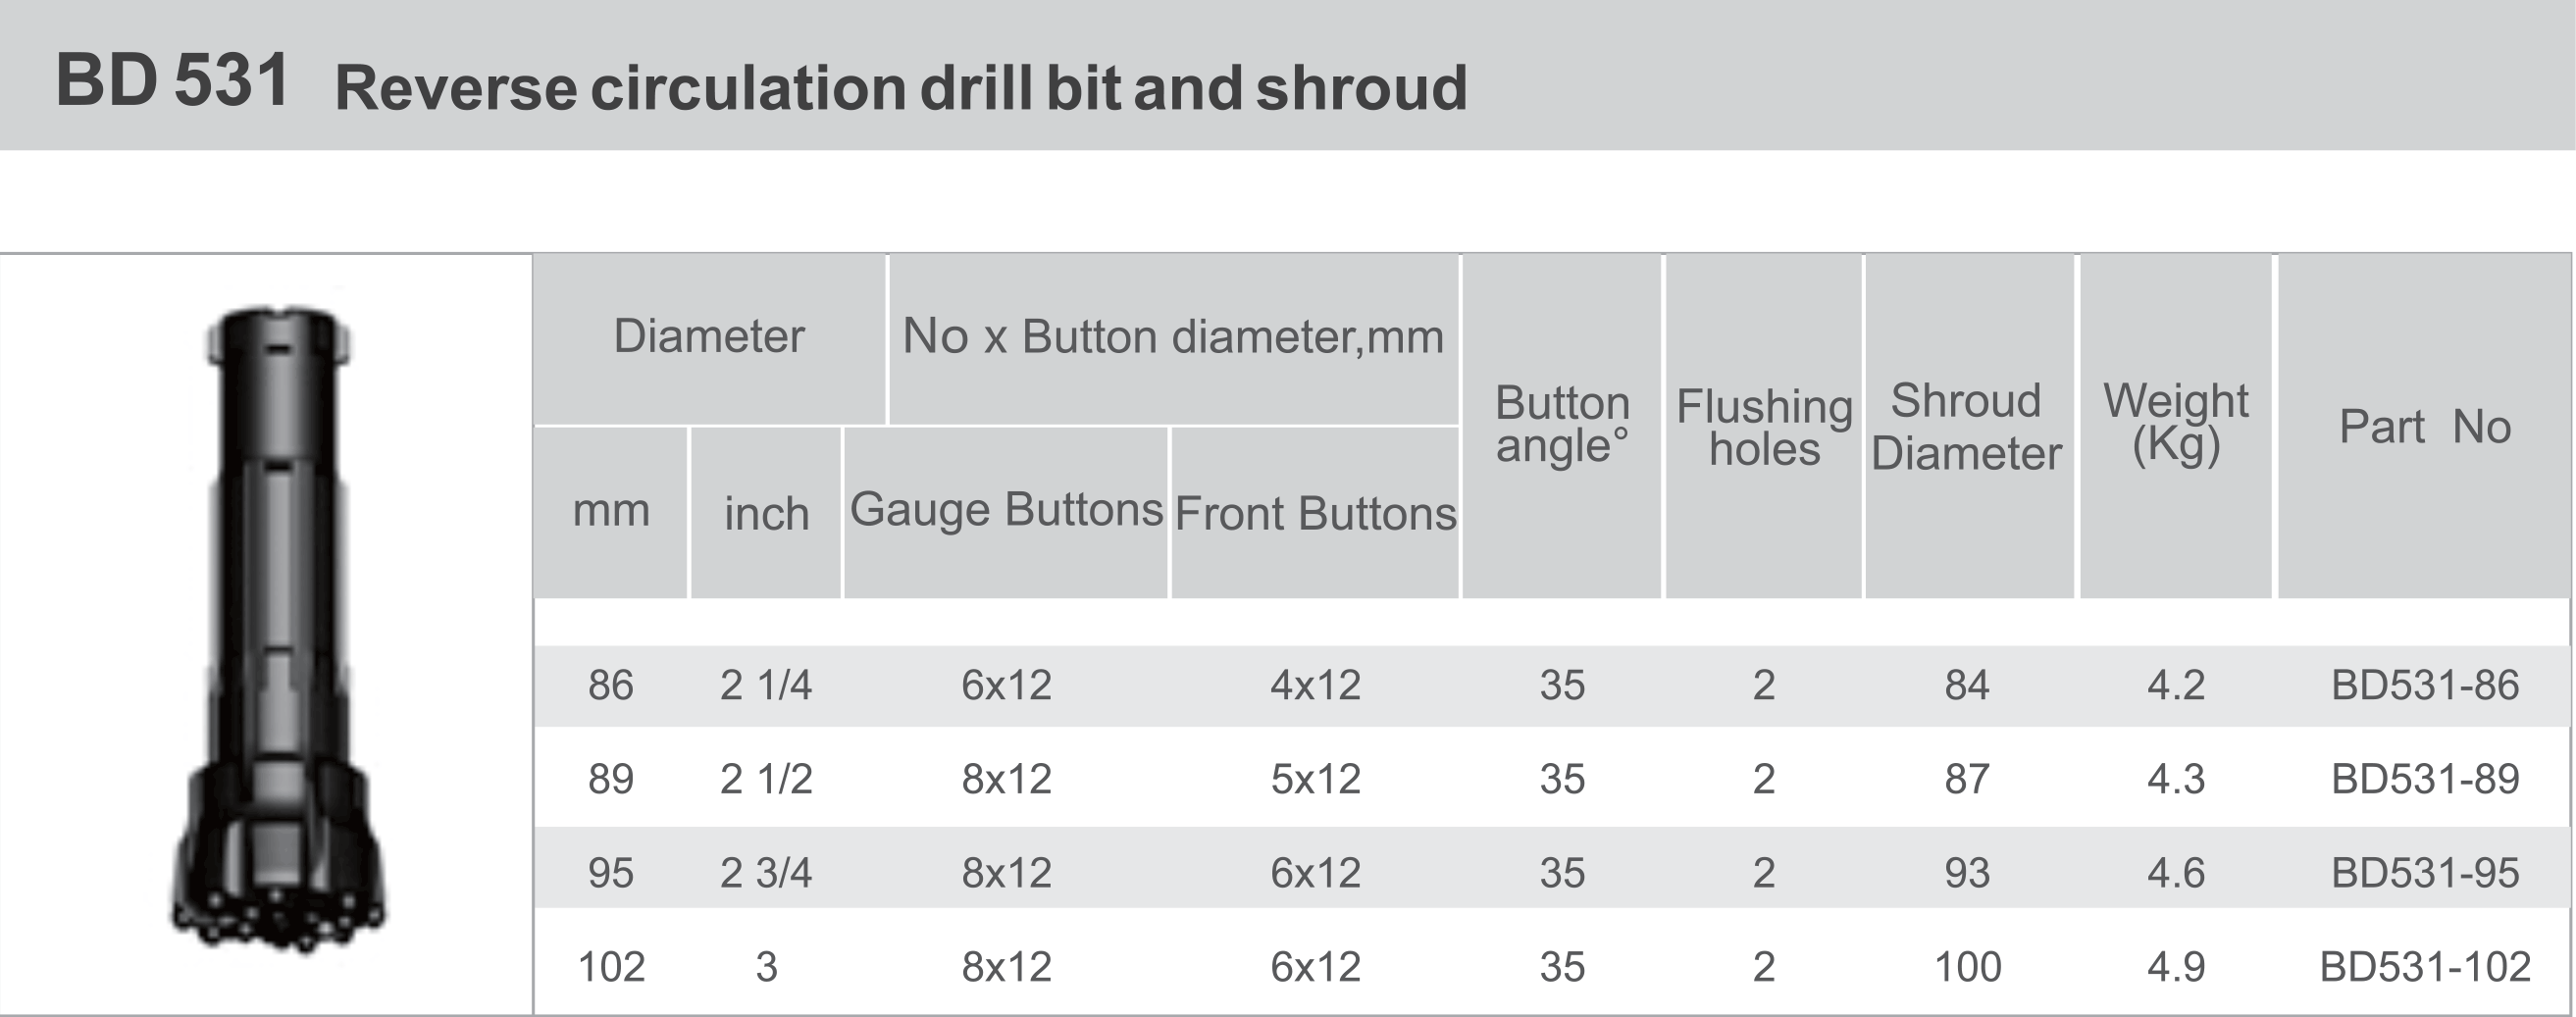 Black Diamond Drilling BD531 RC Reverse Circulation Drill Bit Shroud technical data